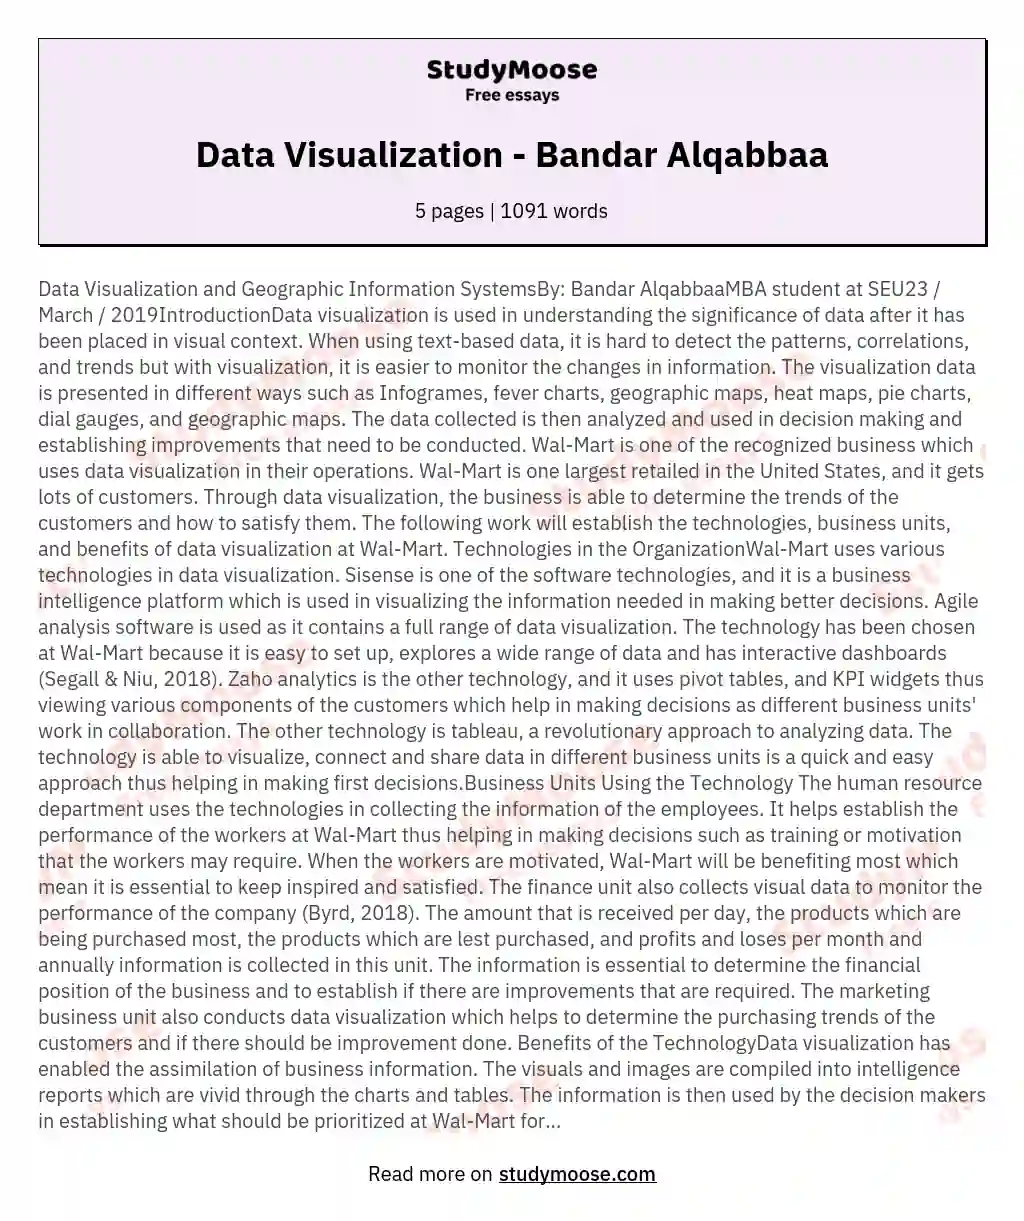 Data Visualization - Bandar Alqabbaa essay